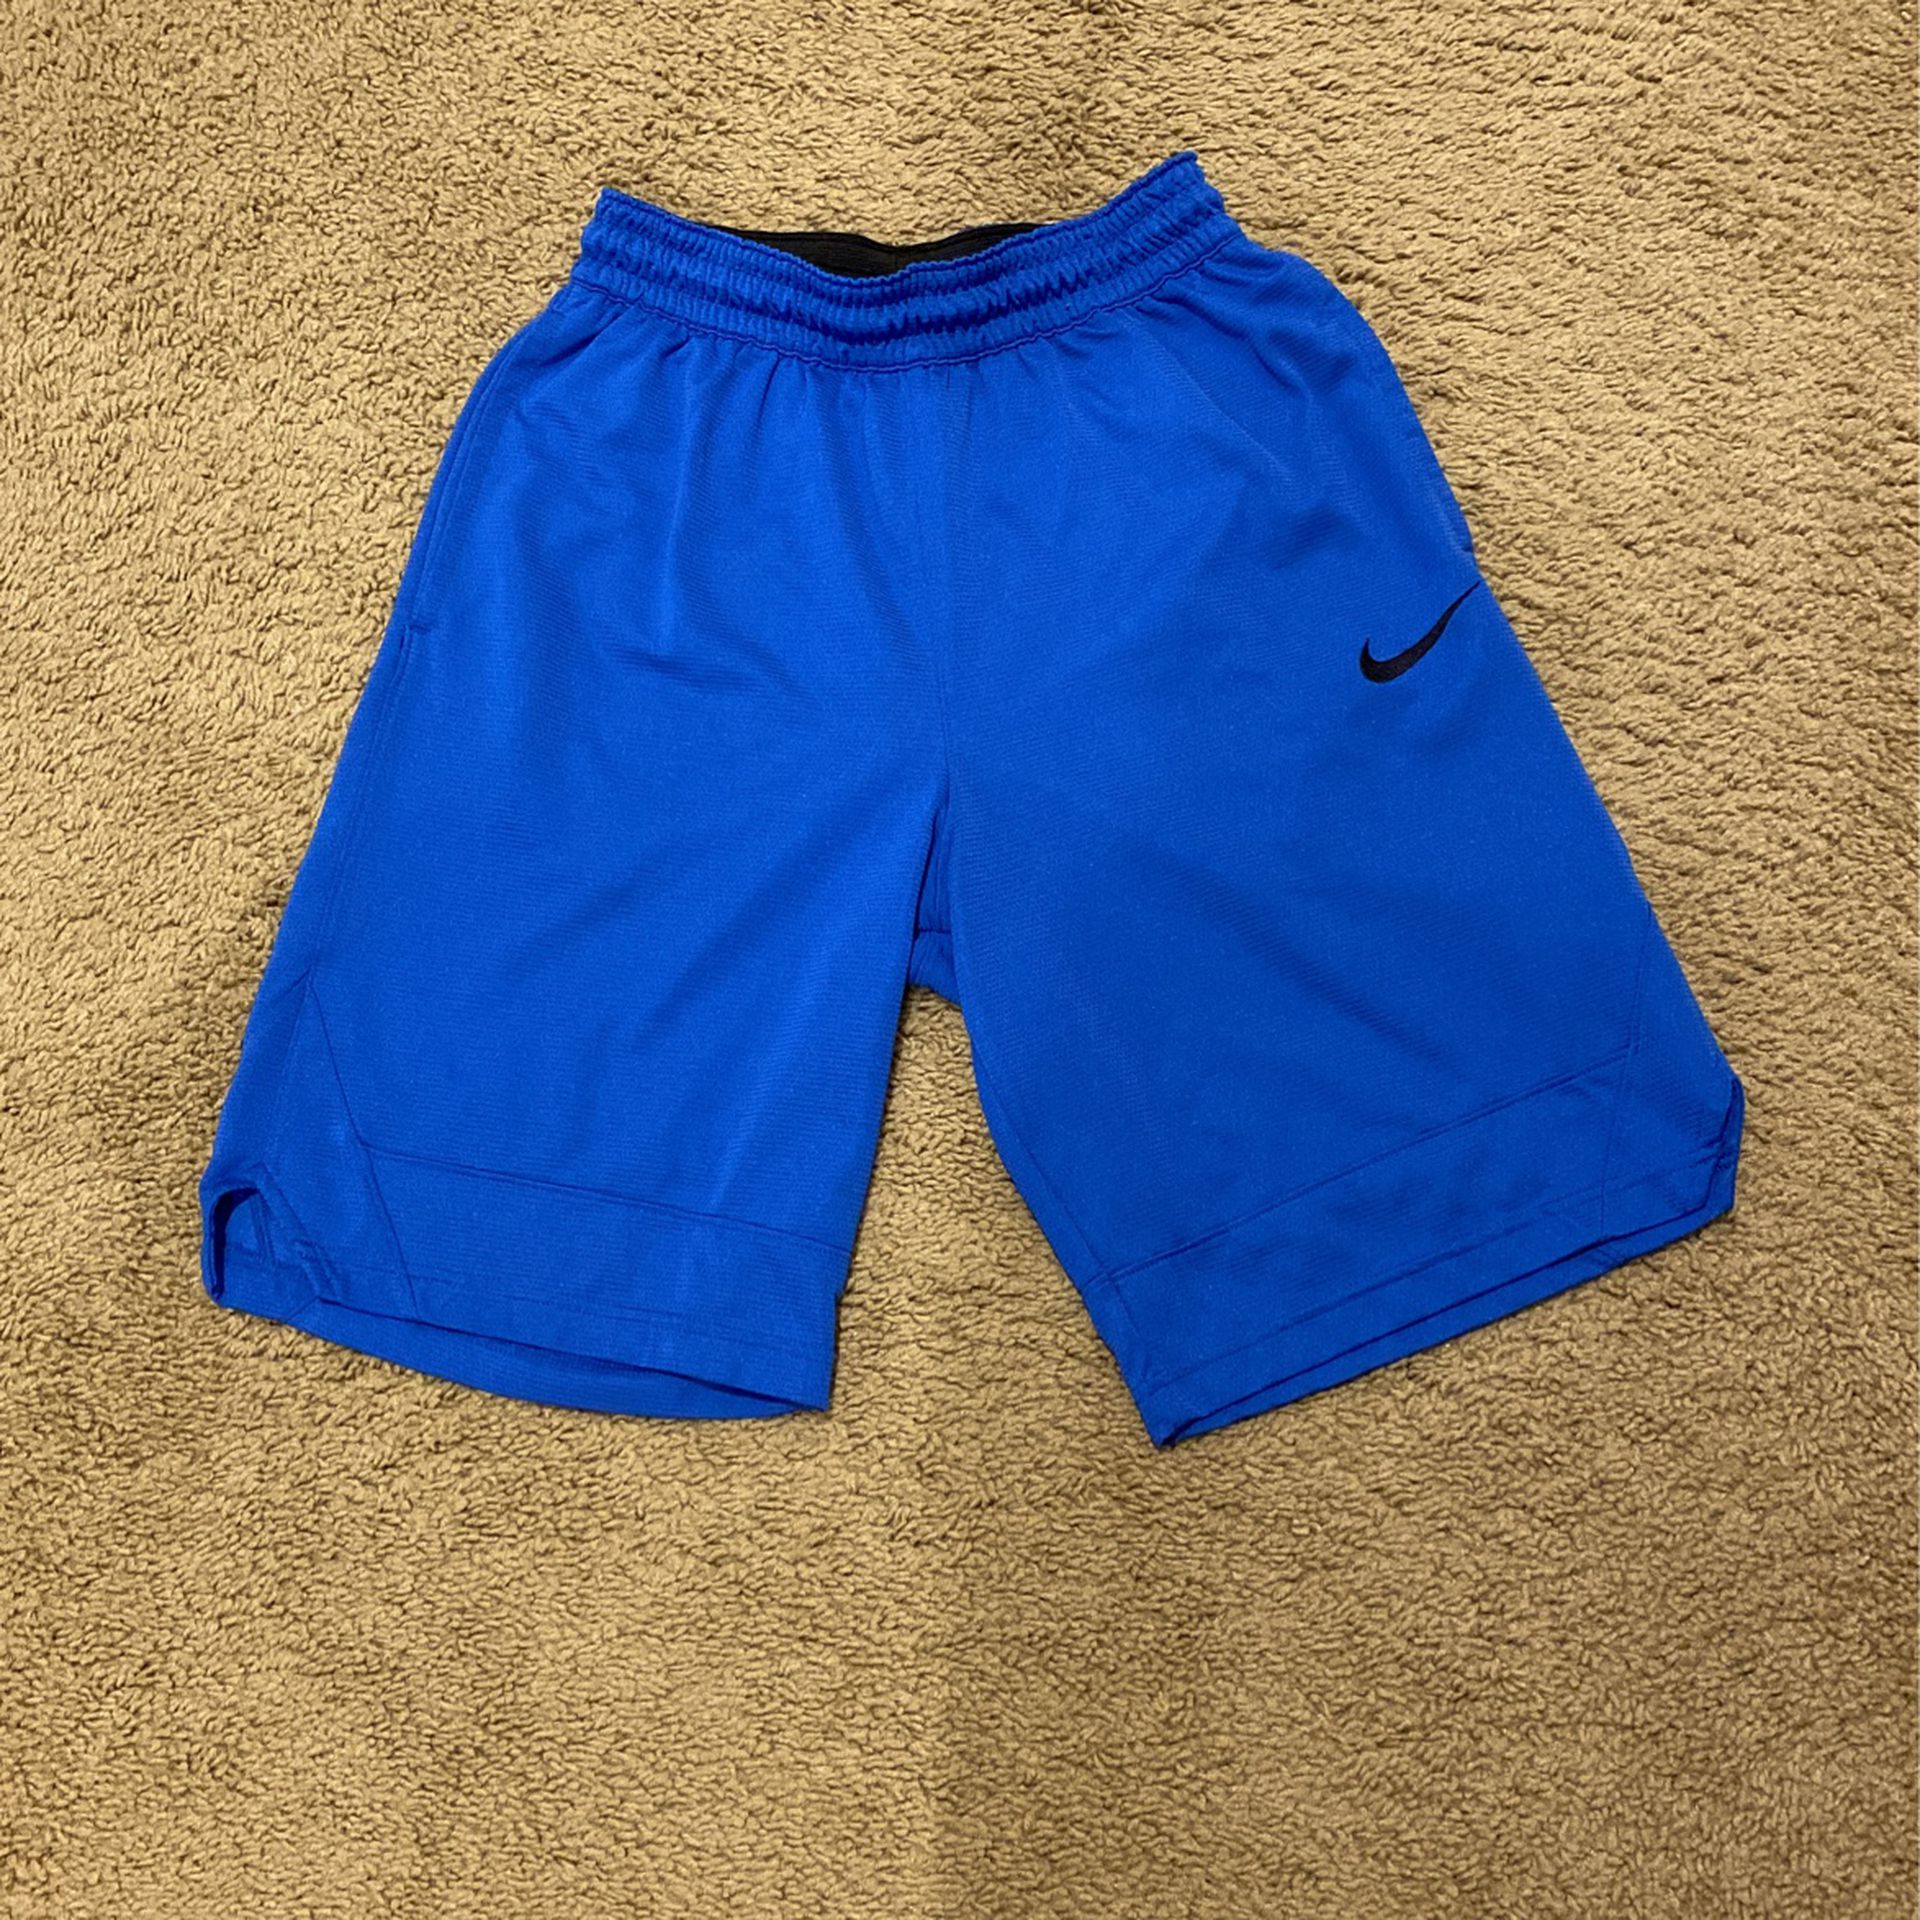 Men’s Nike Dri-Fit Basketball Shorts (size Small)